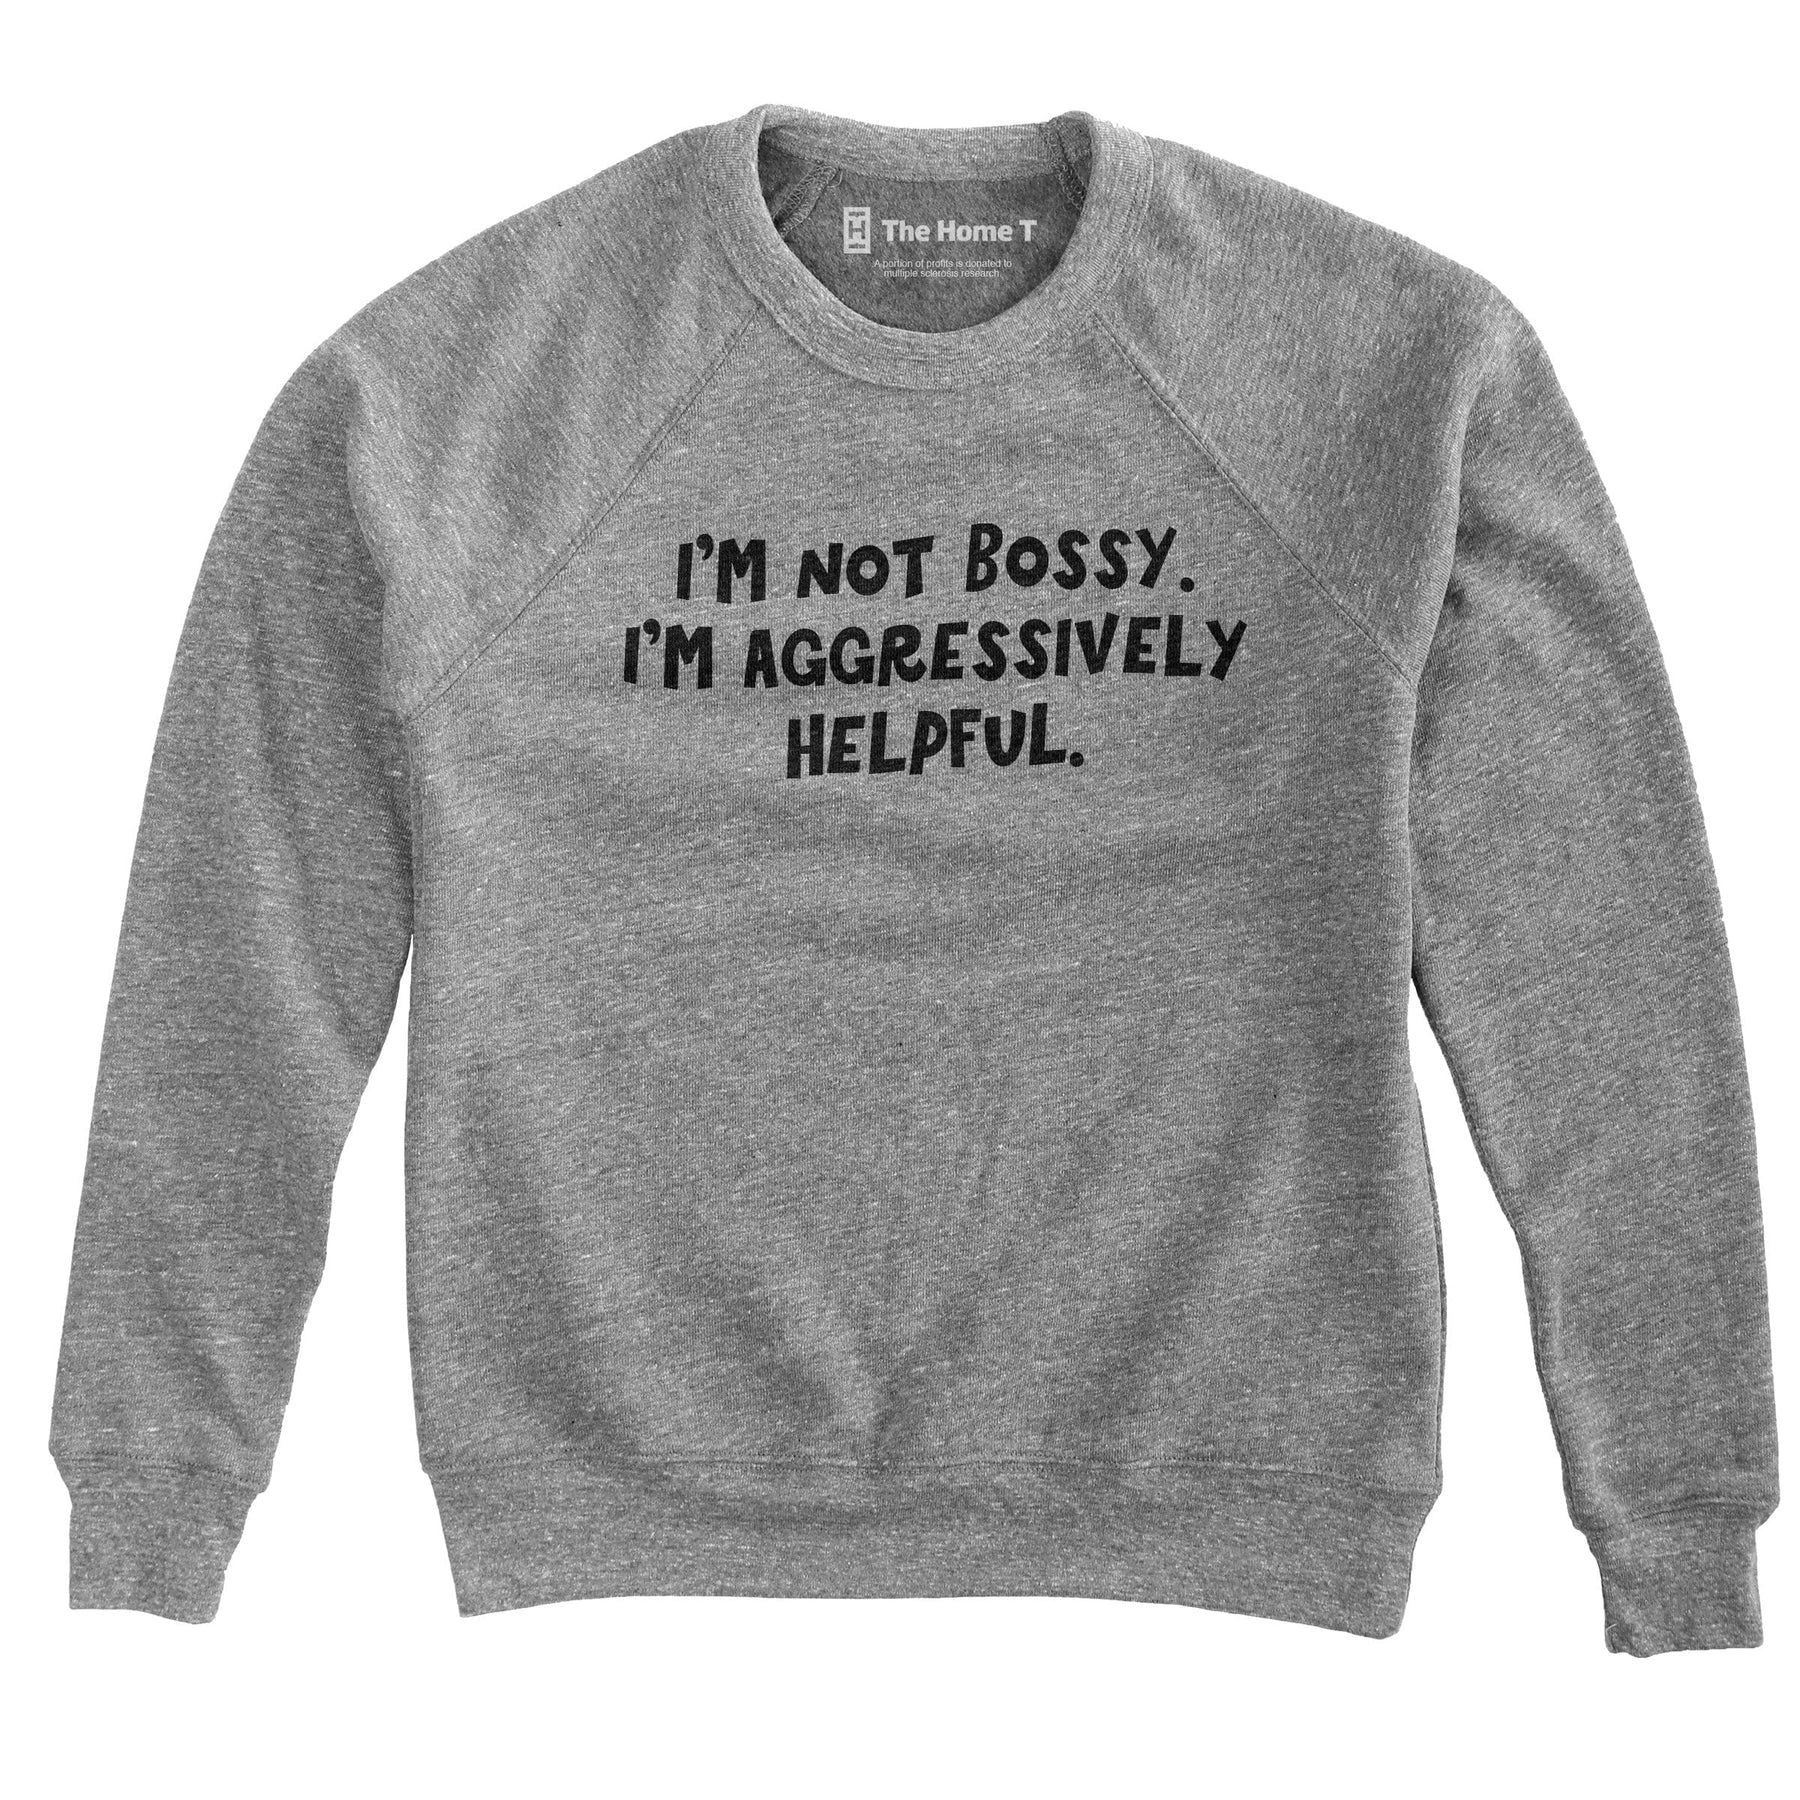 I'm Aggressively Helpful Sweatshirt